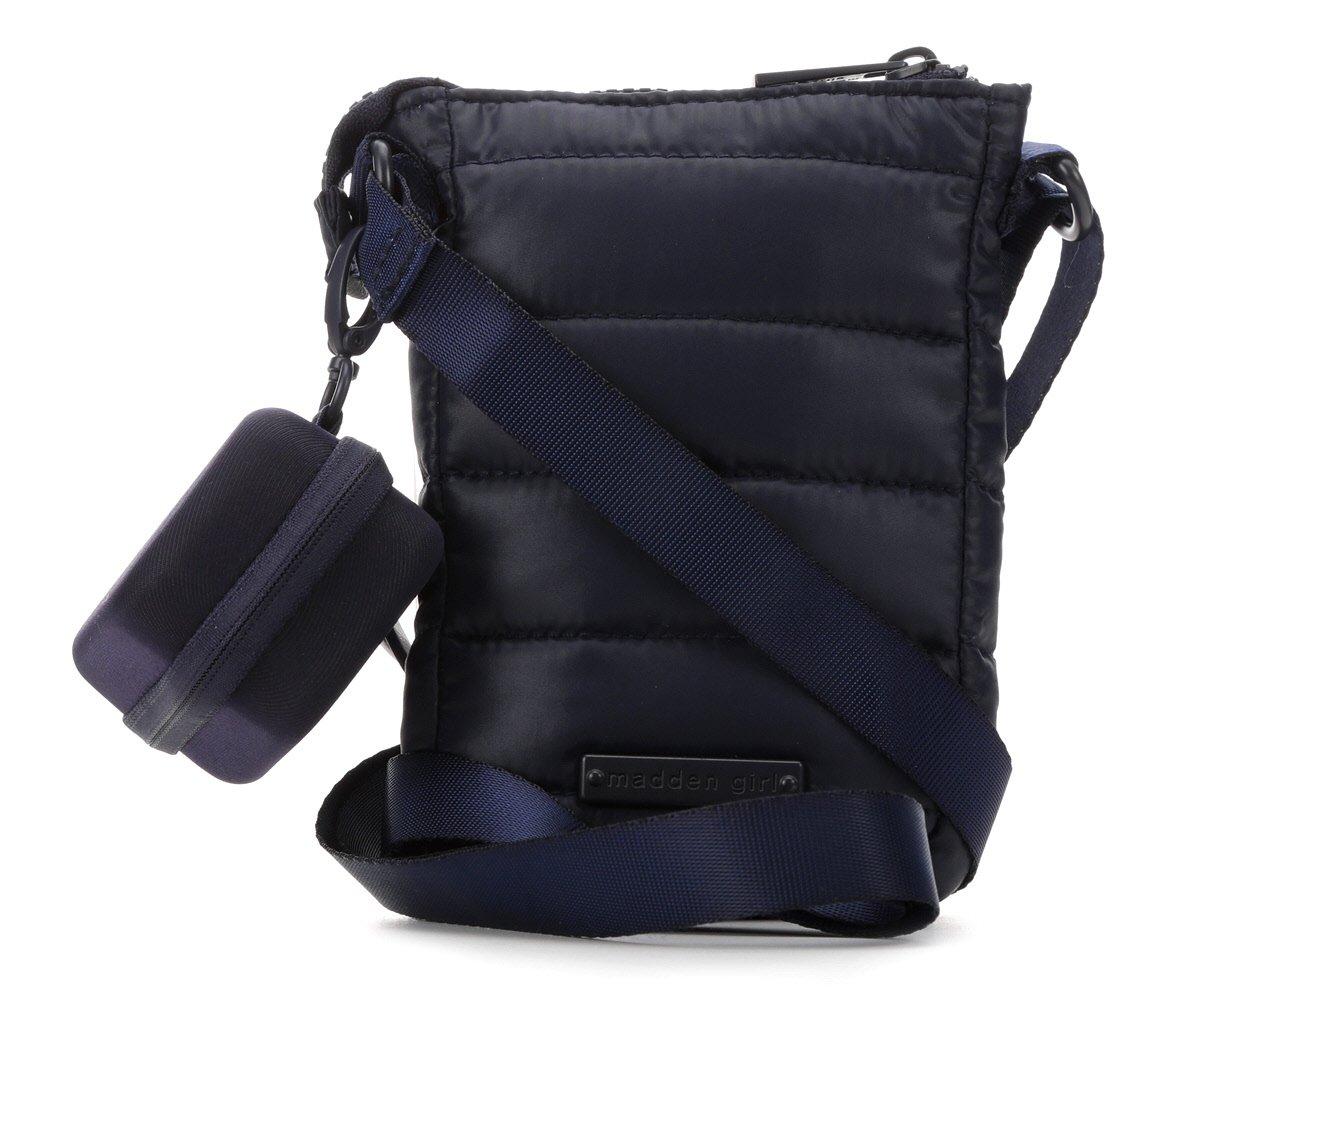 3 ways cross body/handbag/shoulderbag#LouisVuitton #stylehacks #outfit